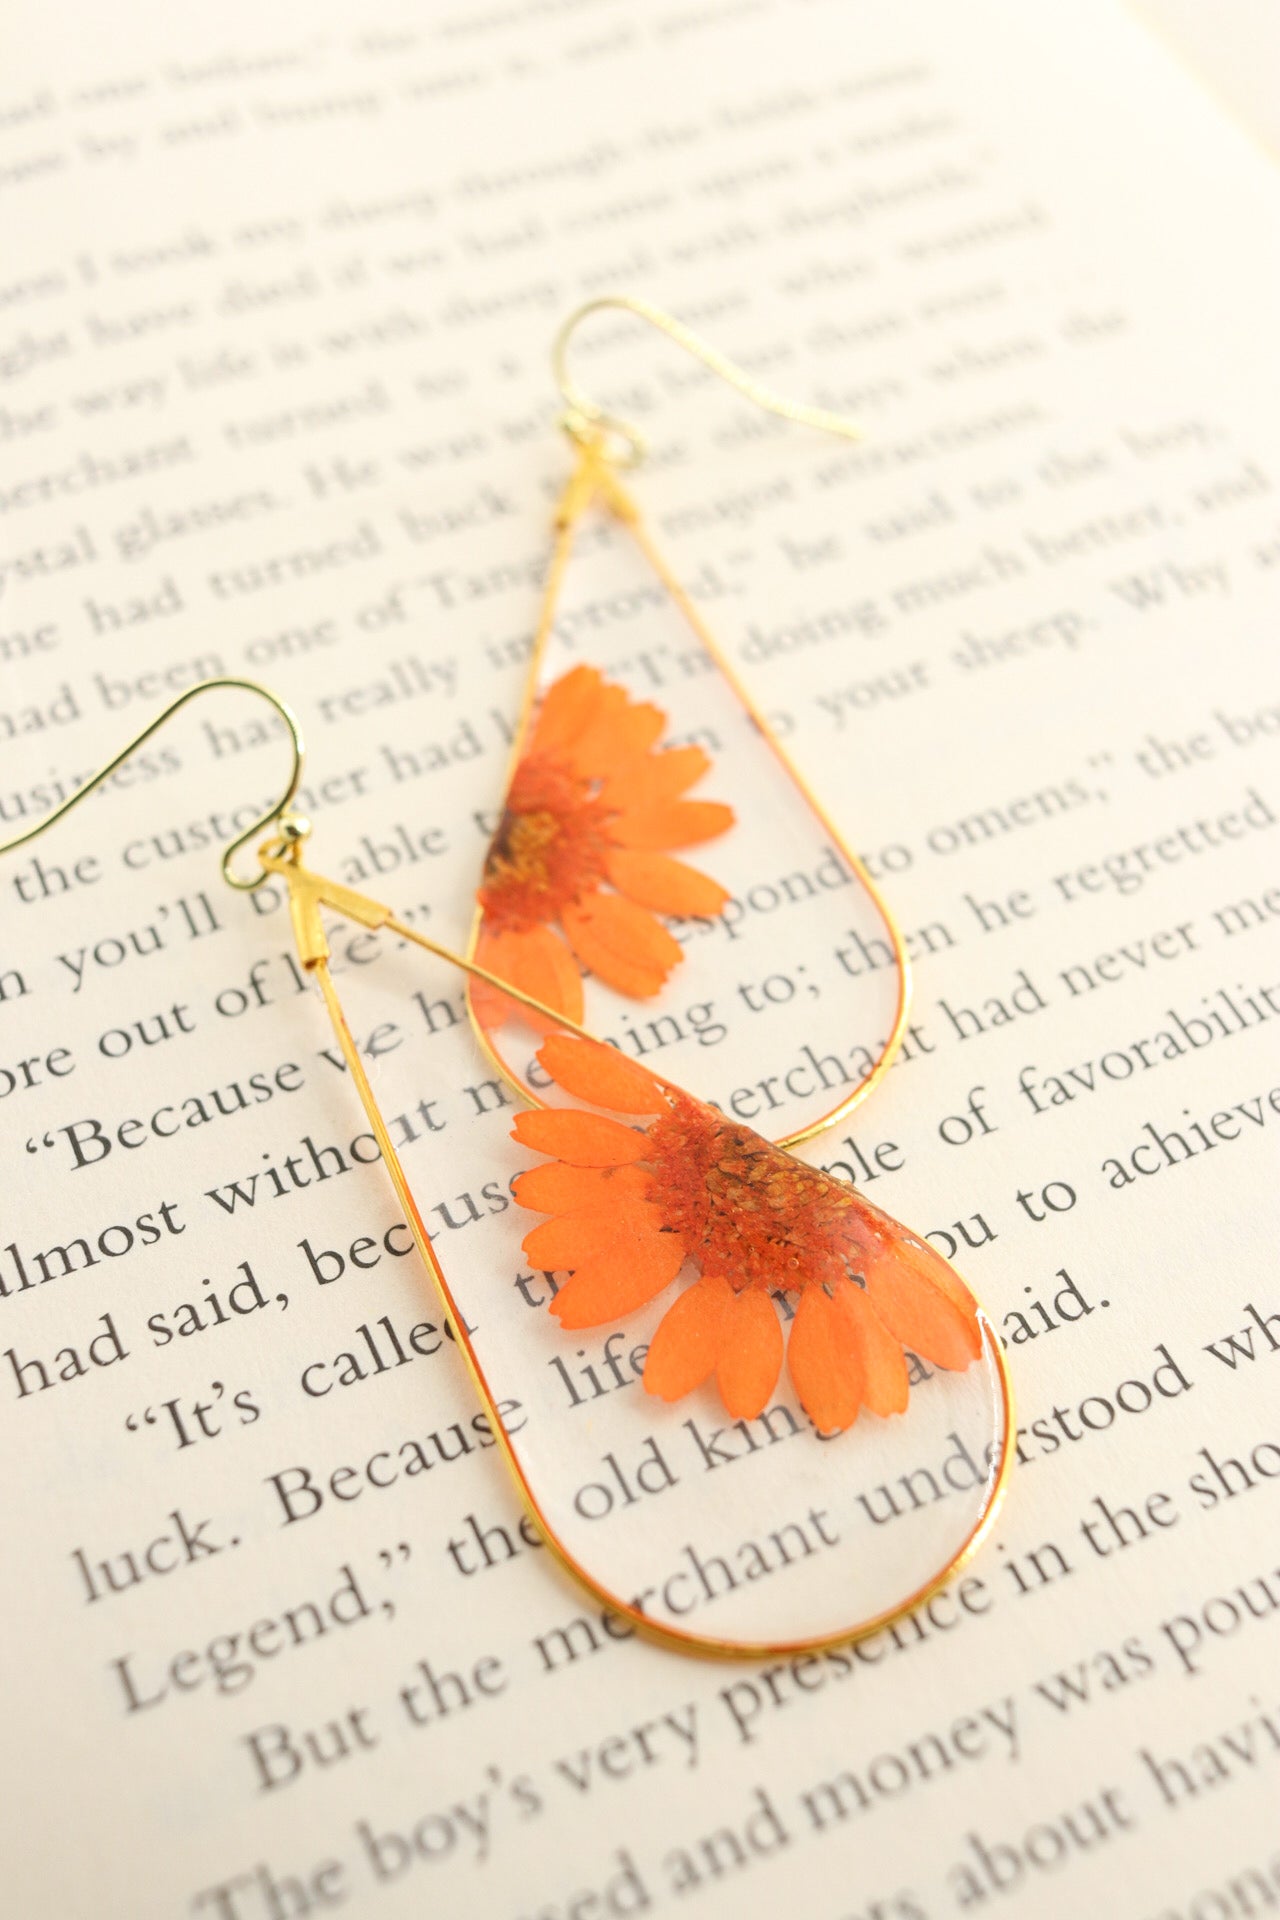 Orange Split Daisy Teardrop Flower Earrings, Pressed Wildflower Resin Earrings, Botanical Nature Jewelry Gift For Her